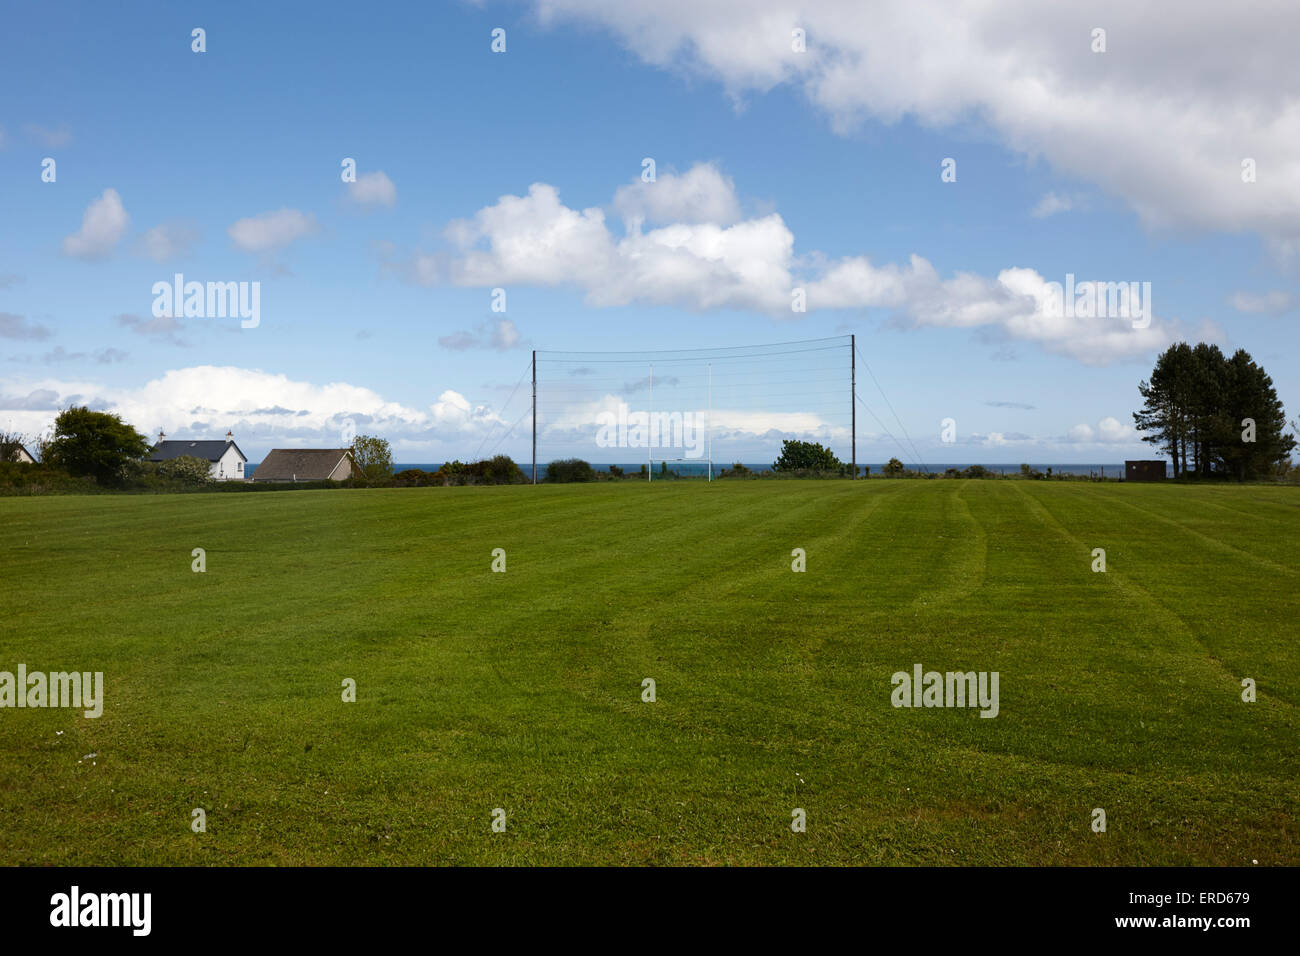 gaelic games football pitch Cushendall County Antrim Northern Ireland UK Stock Photo